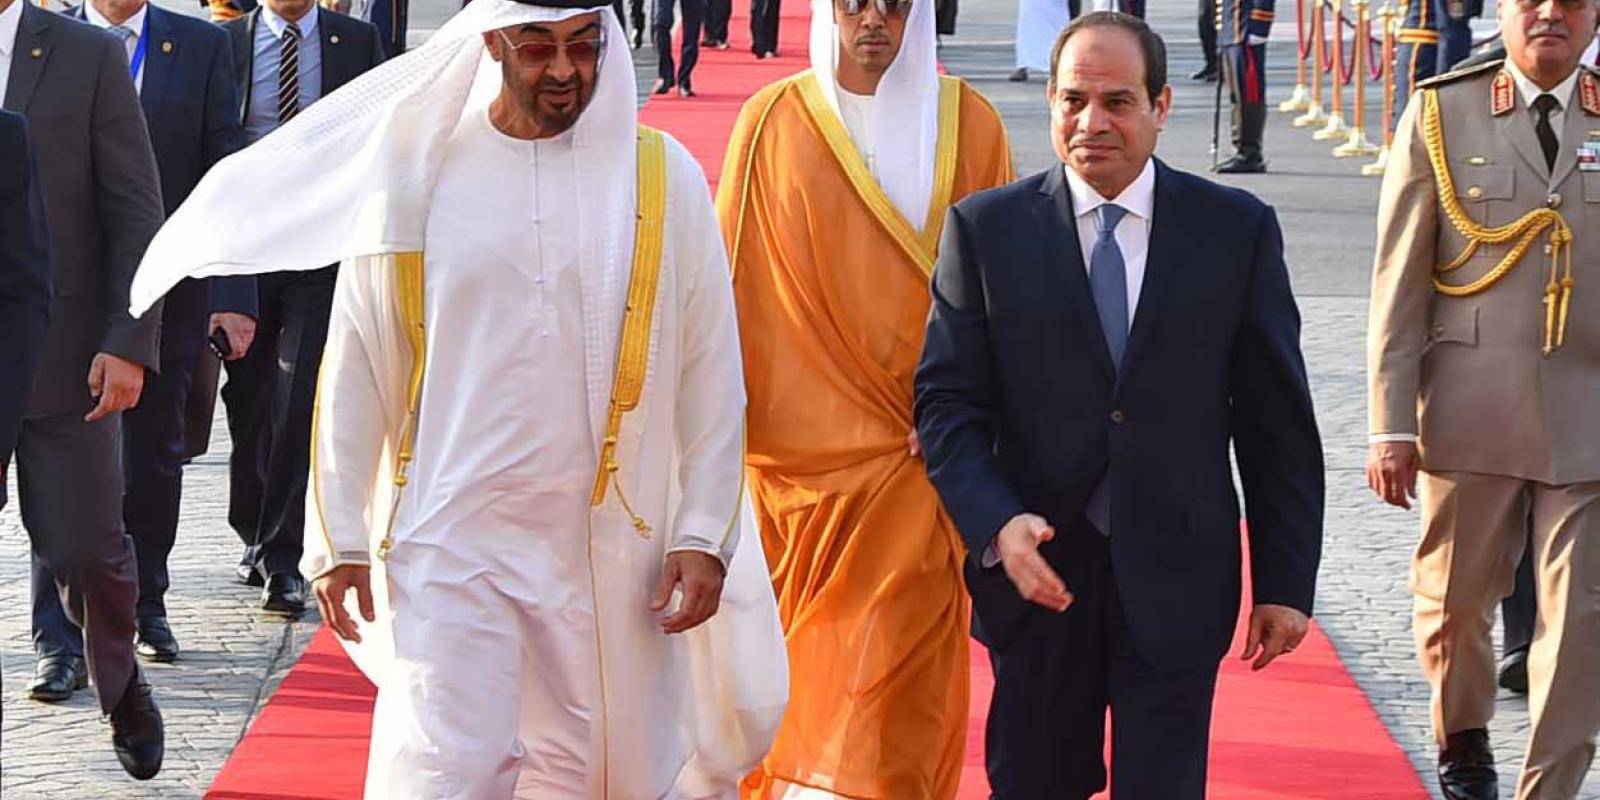 Crown Prince of Abu Dhabi Mohammed bin Zayed is welcomed by Egypt’s President
Abdel-Fattah el-Sisi in Cairo on 19 June 2017. Photo: Egyptian Presidency – Handout/Anadolu Agency/Getty